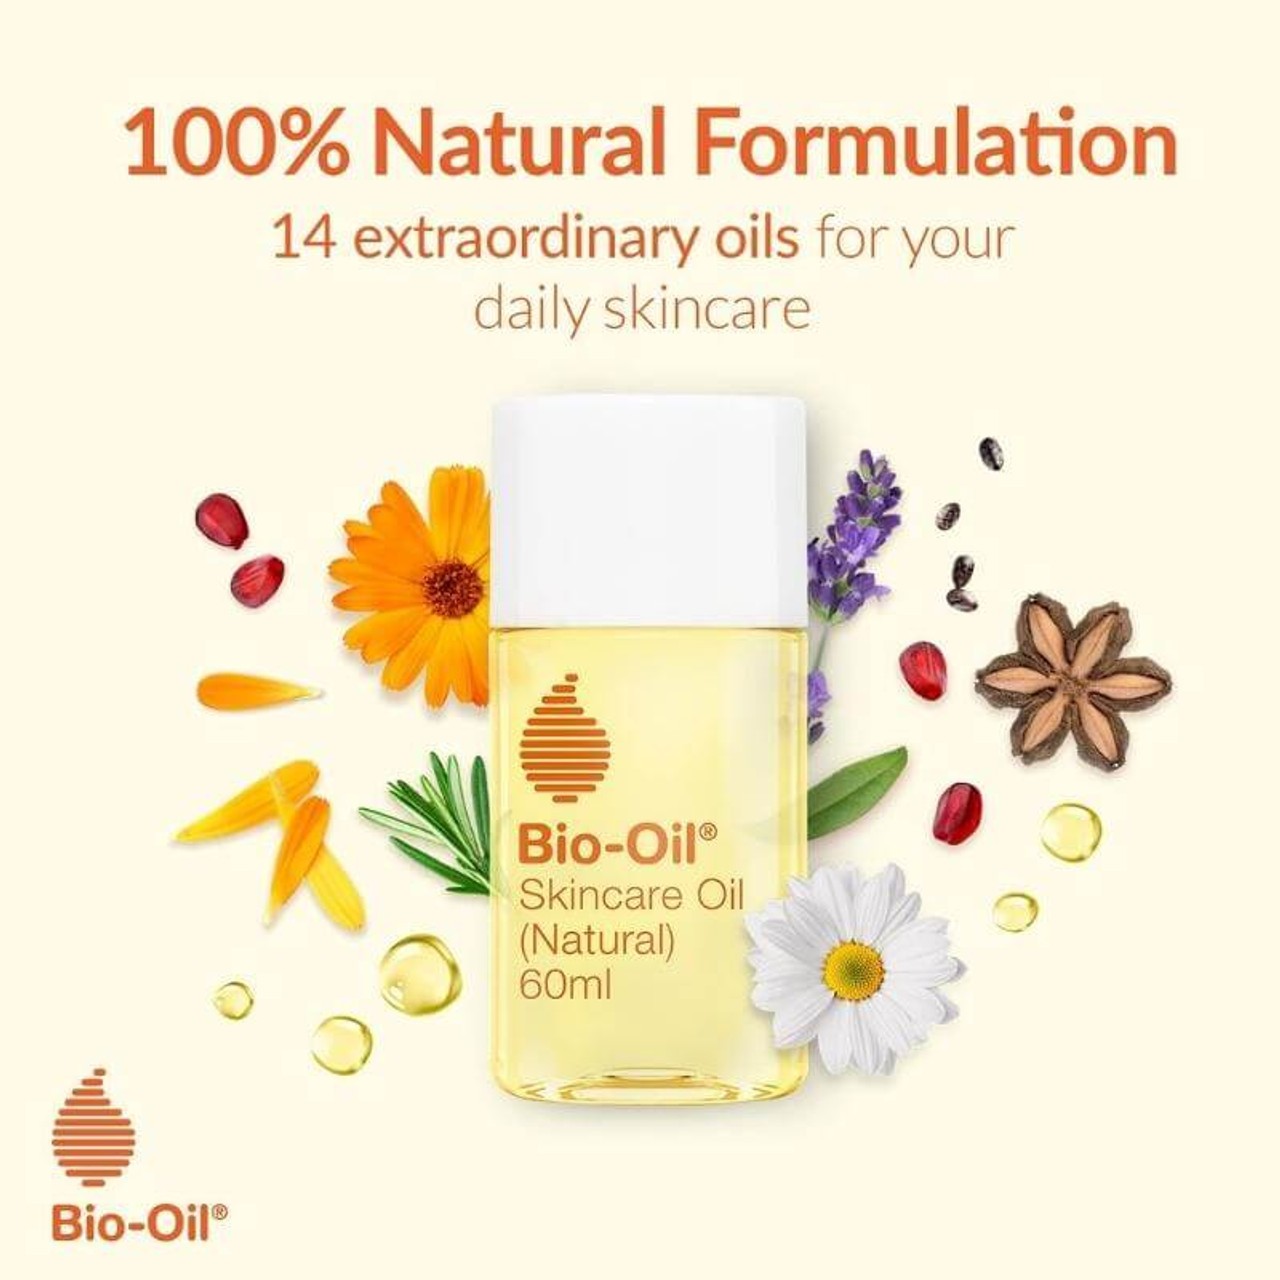 Bio Oil Skincare Oil Natural : BeautyFeatures